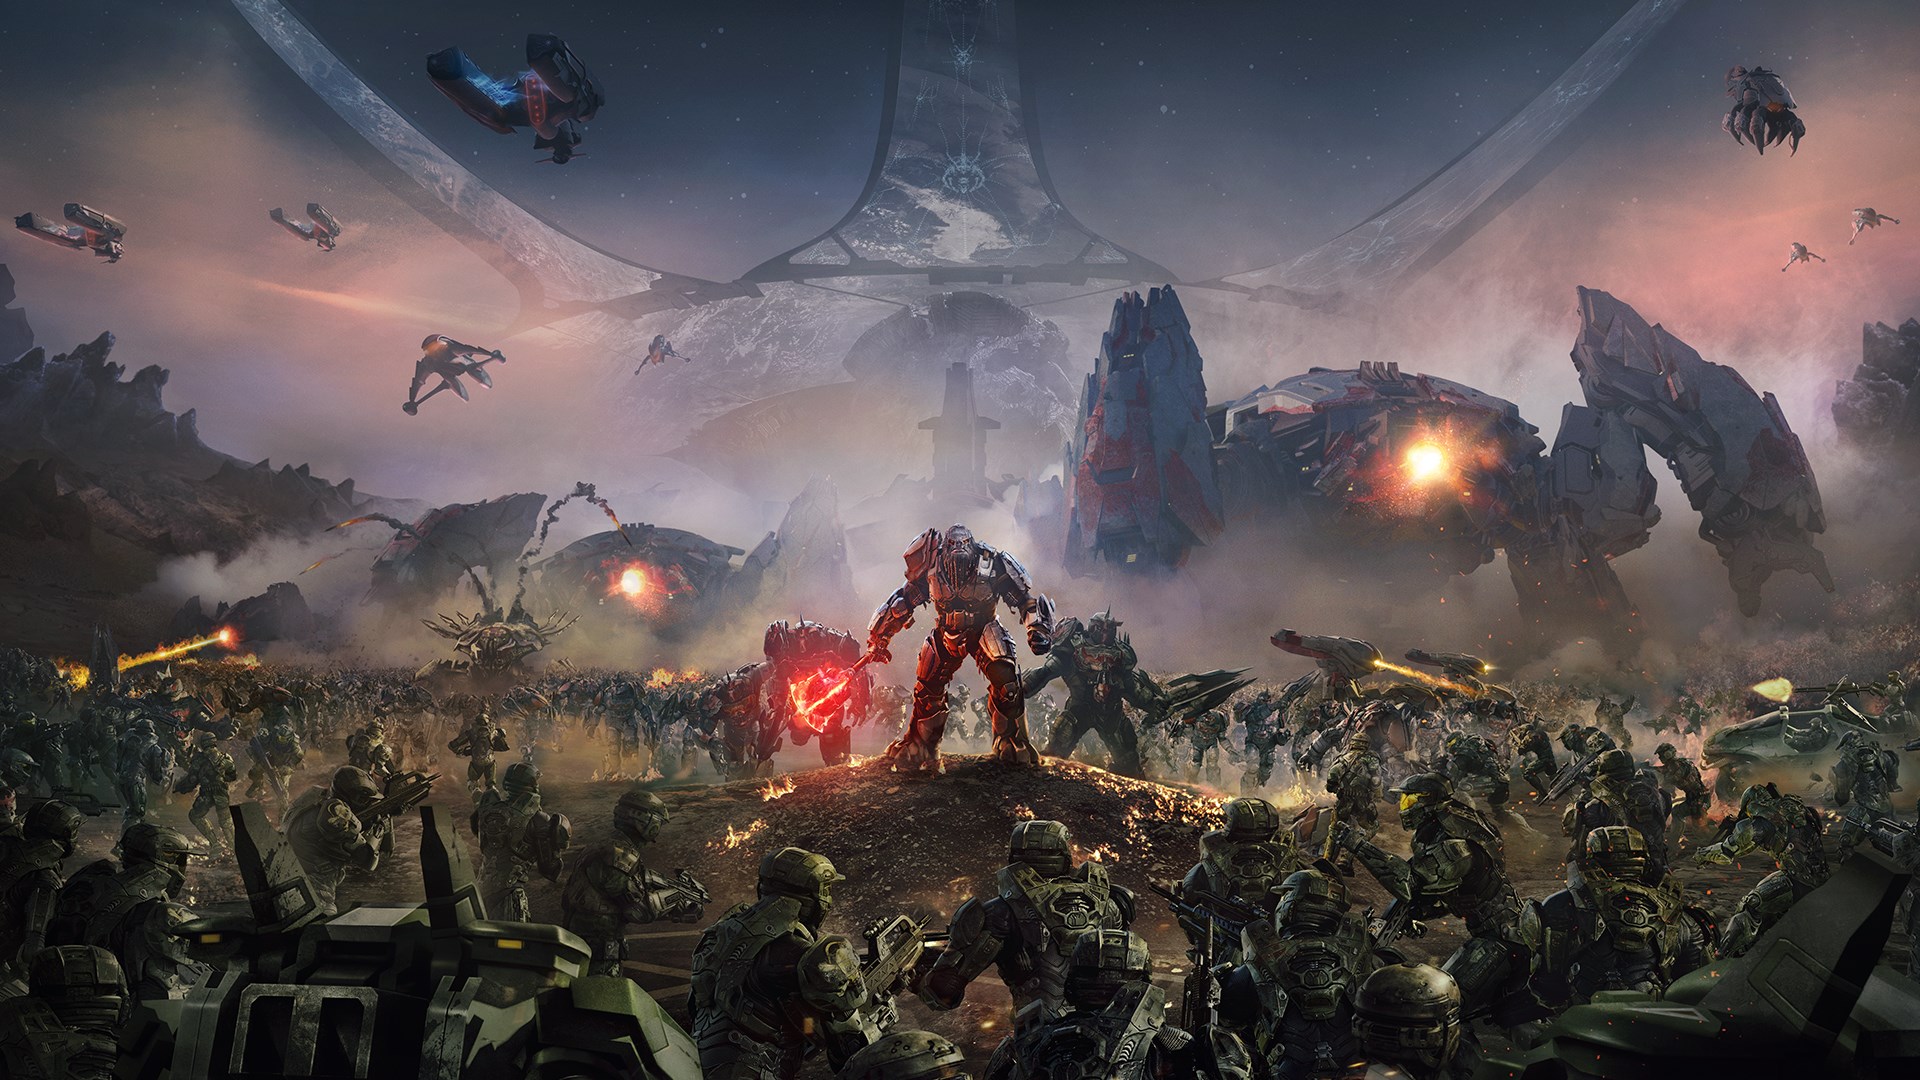 Get Halo Wars 2 Demo - Microsoft Store en-GI